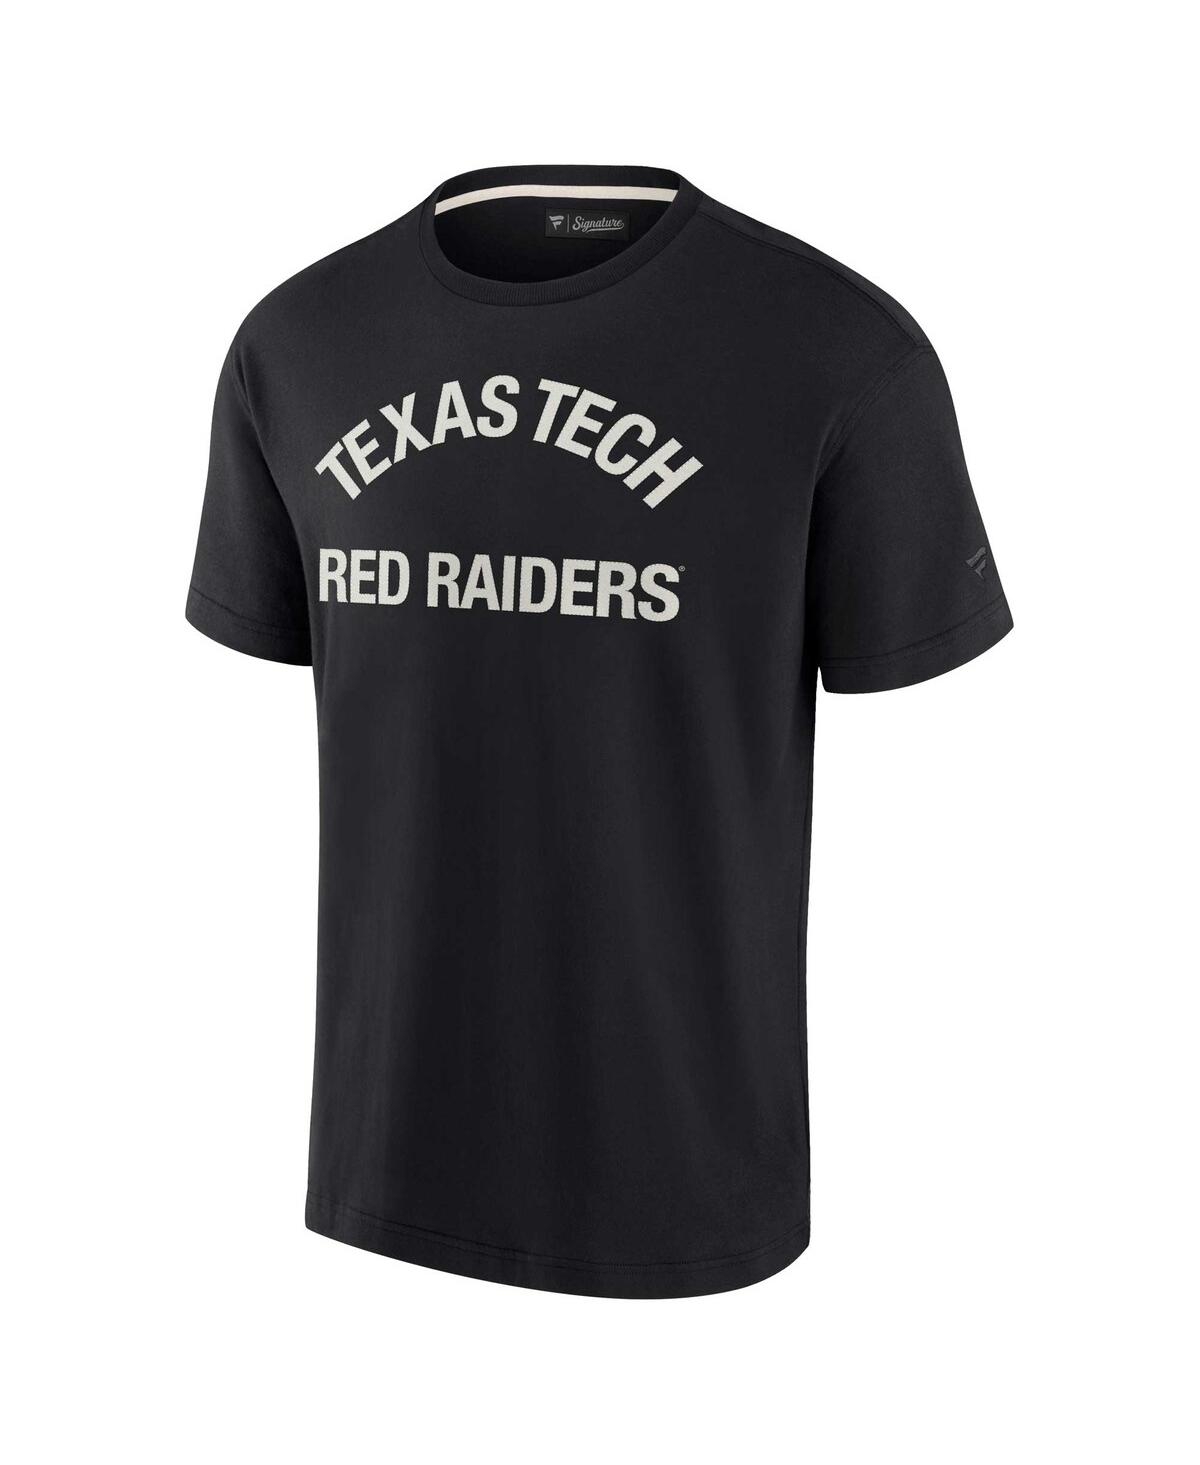 Shop Fanatics Signature Men's And Women's  Black Texas Tech Red Raiders Super Soft Short Sleeve T-shirt